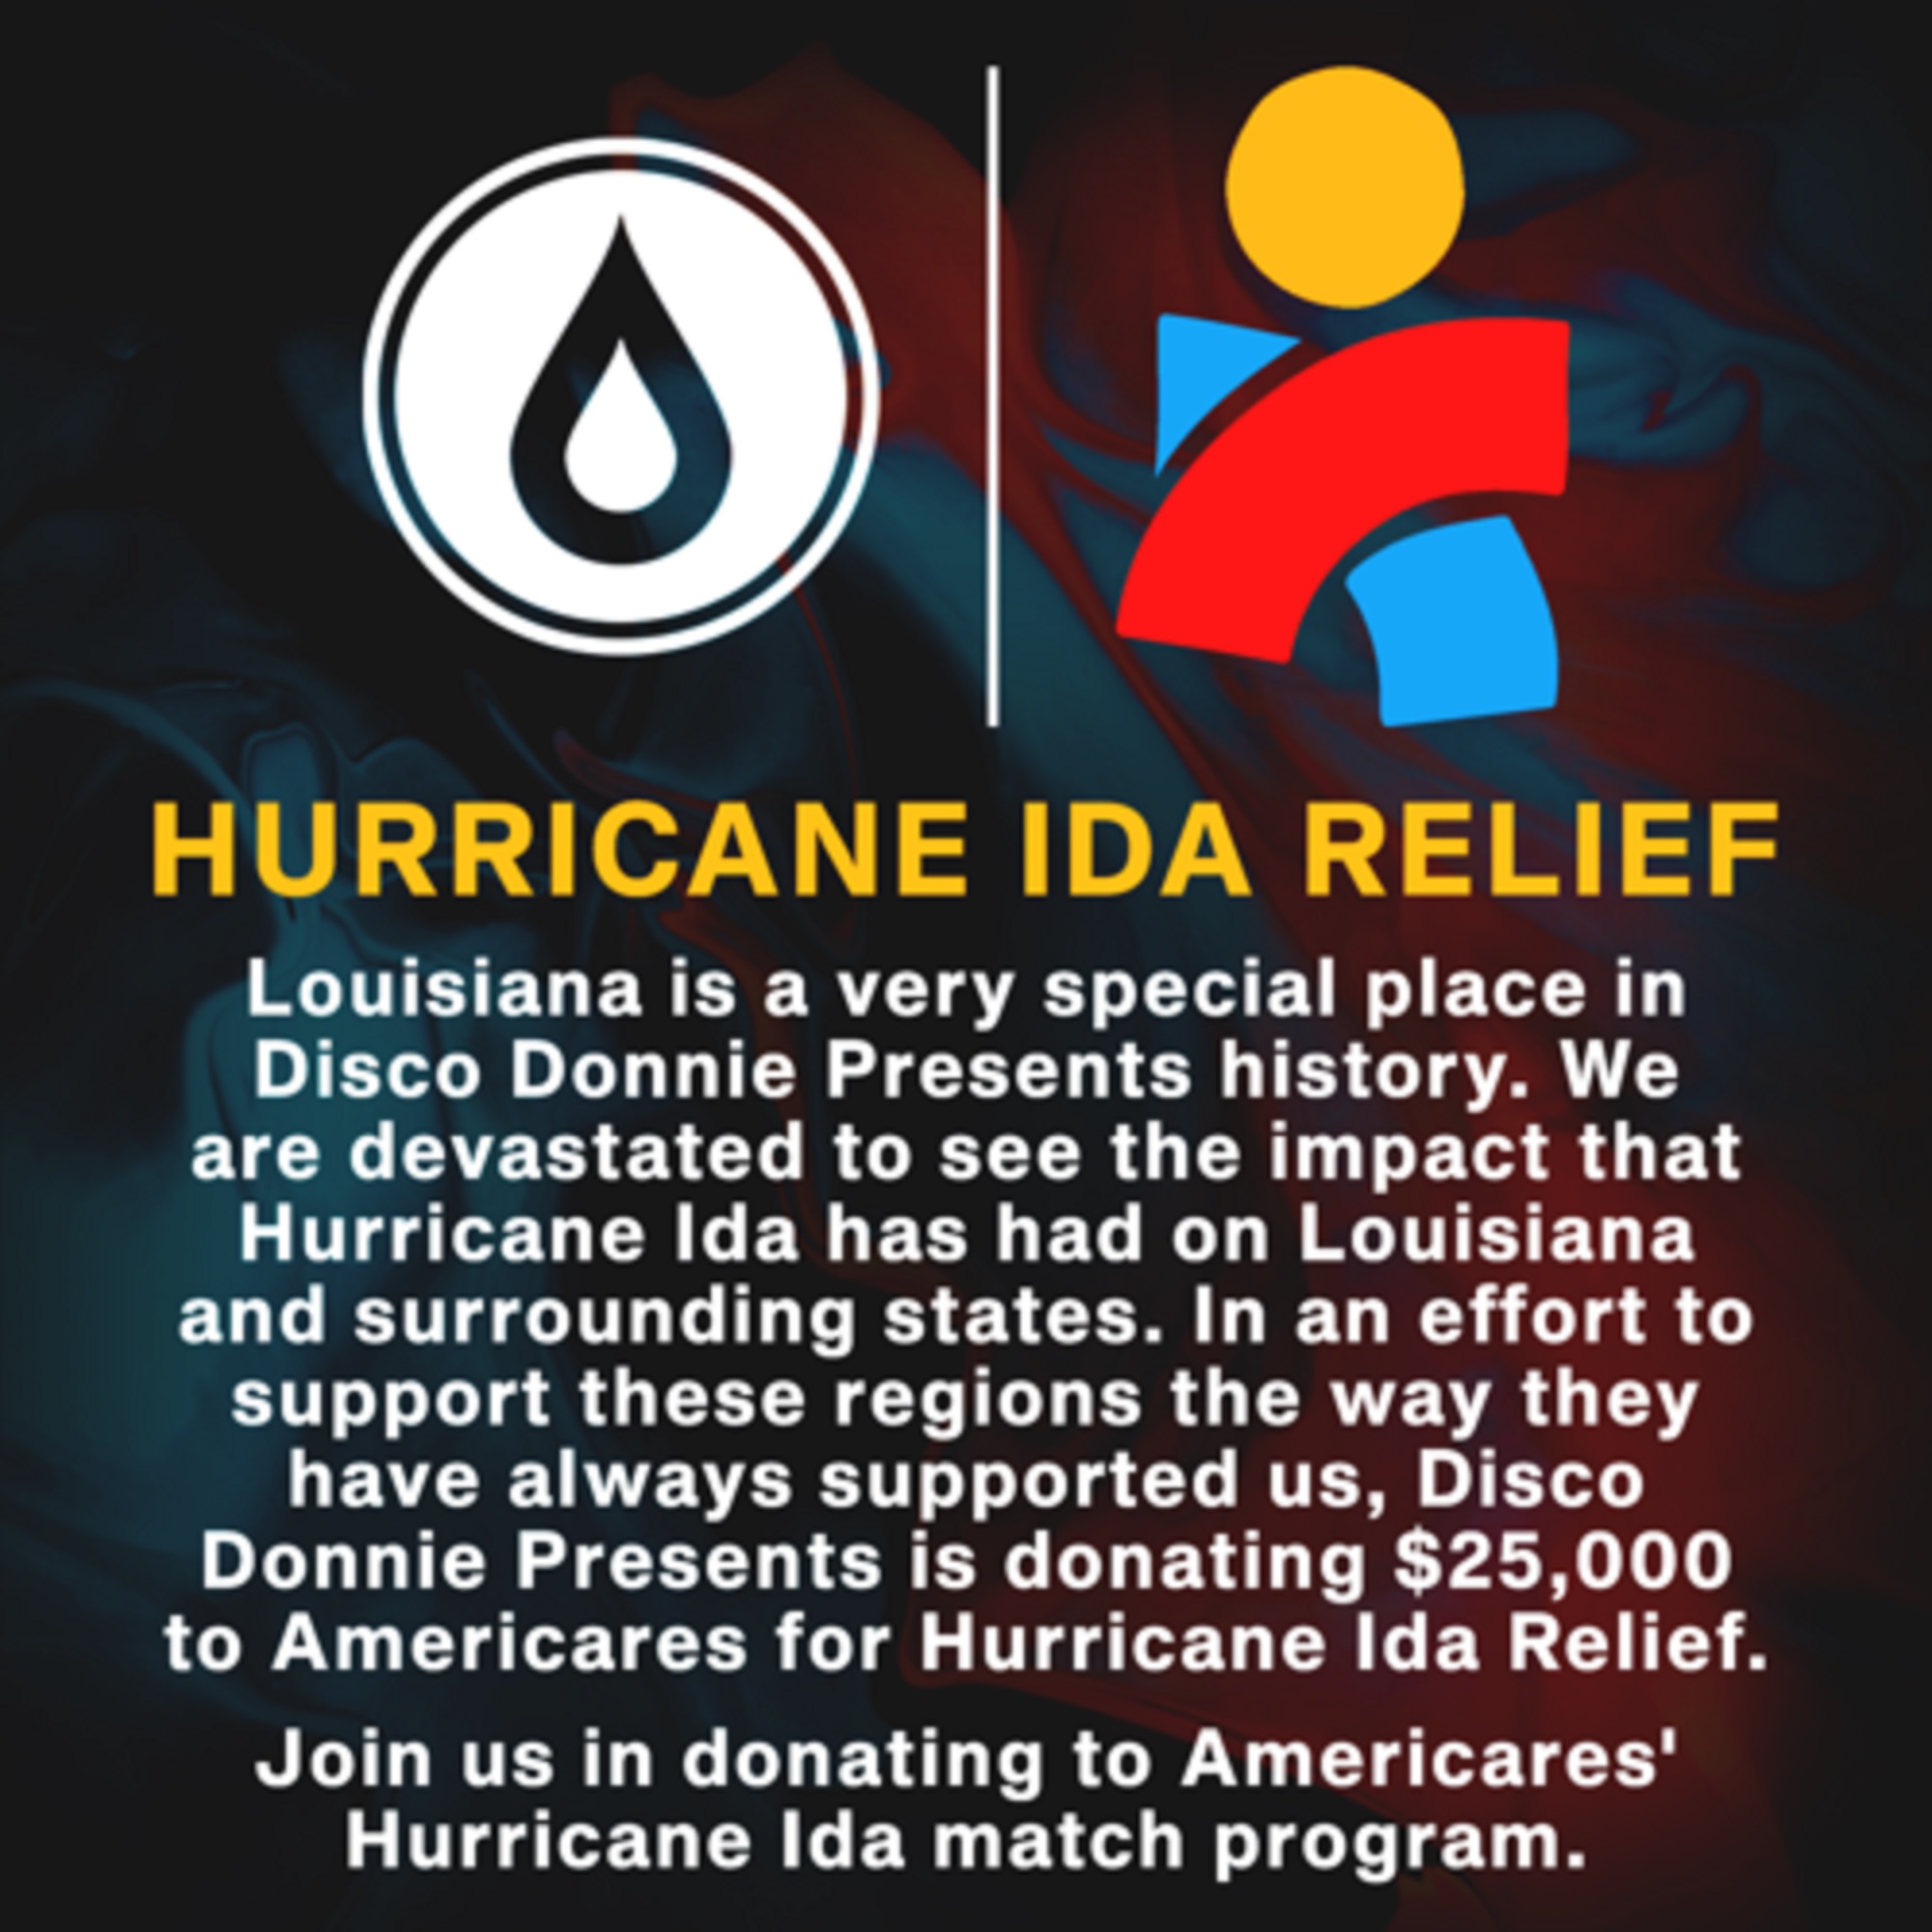 Disco Donnie Presents Donates $25,000 to Americares for Hurricane Ida Relief